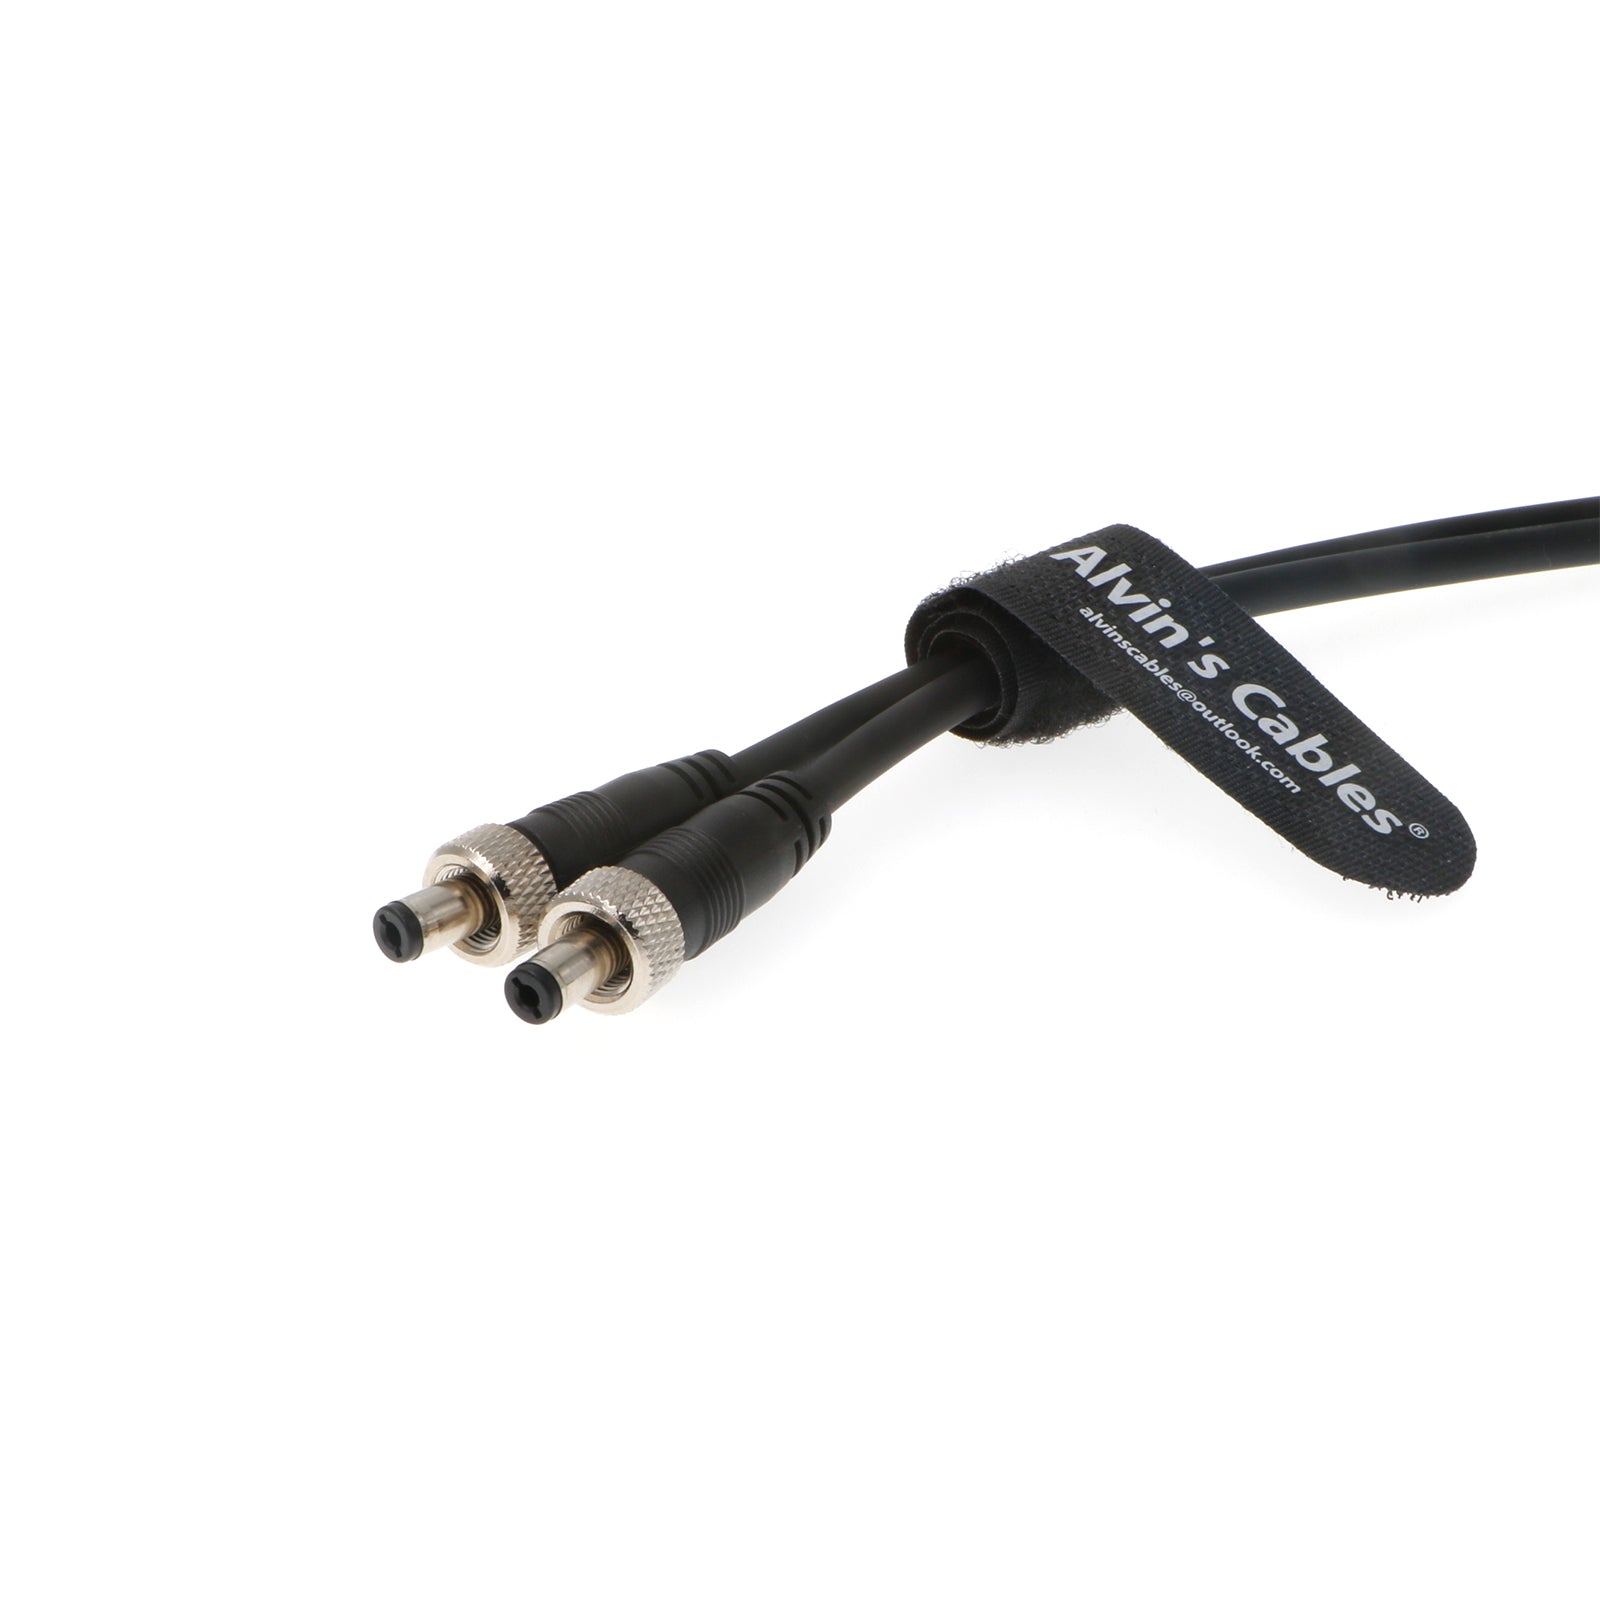 Stromkabel für Lectrosonics-Empfänger Hirose 4 Pin Stecker auf Dual Lock DC Kabel Alvin’s Cables 50CM|20inches